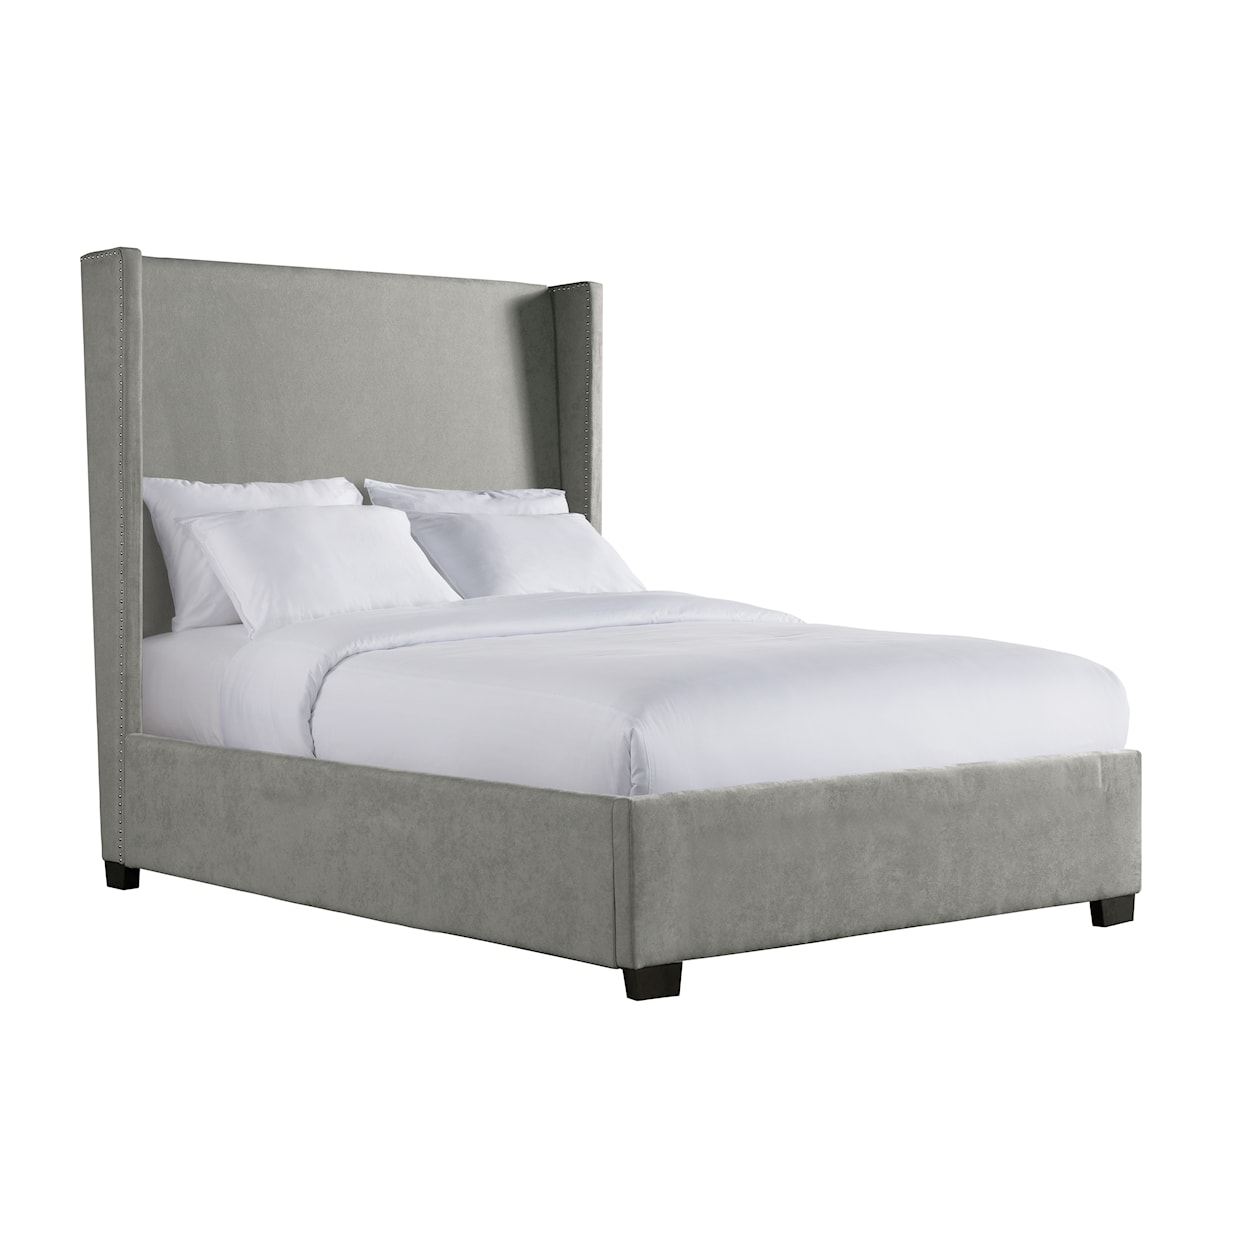 Elements International Magnolia Queen Upholstered Bed